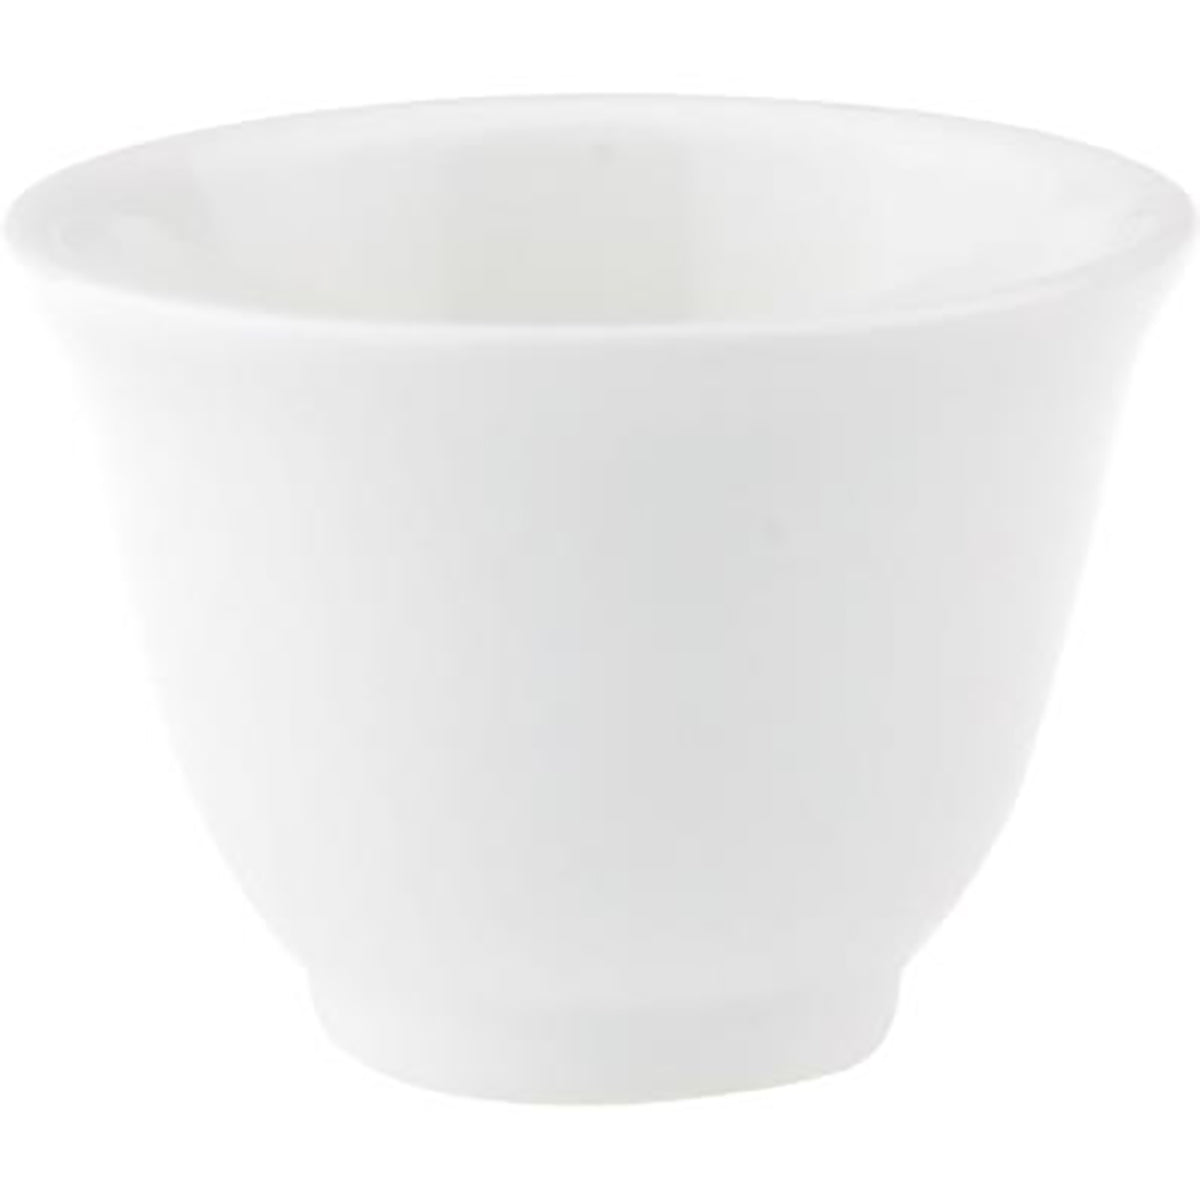 94150 Royal Porcelain Chelsea Chinese Teacup 0.1Lt (4022) Tomkin Australia Hospitality Supplies